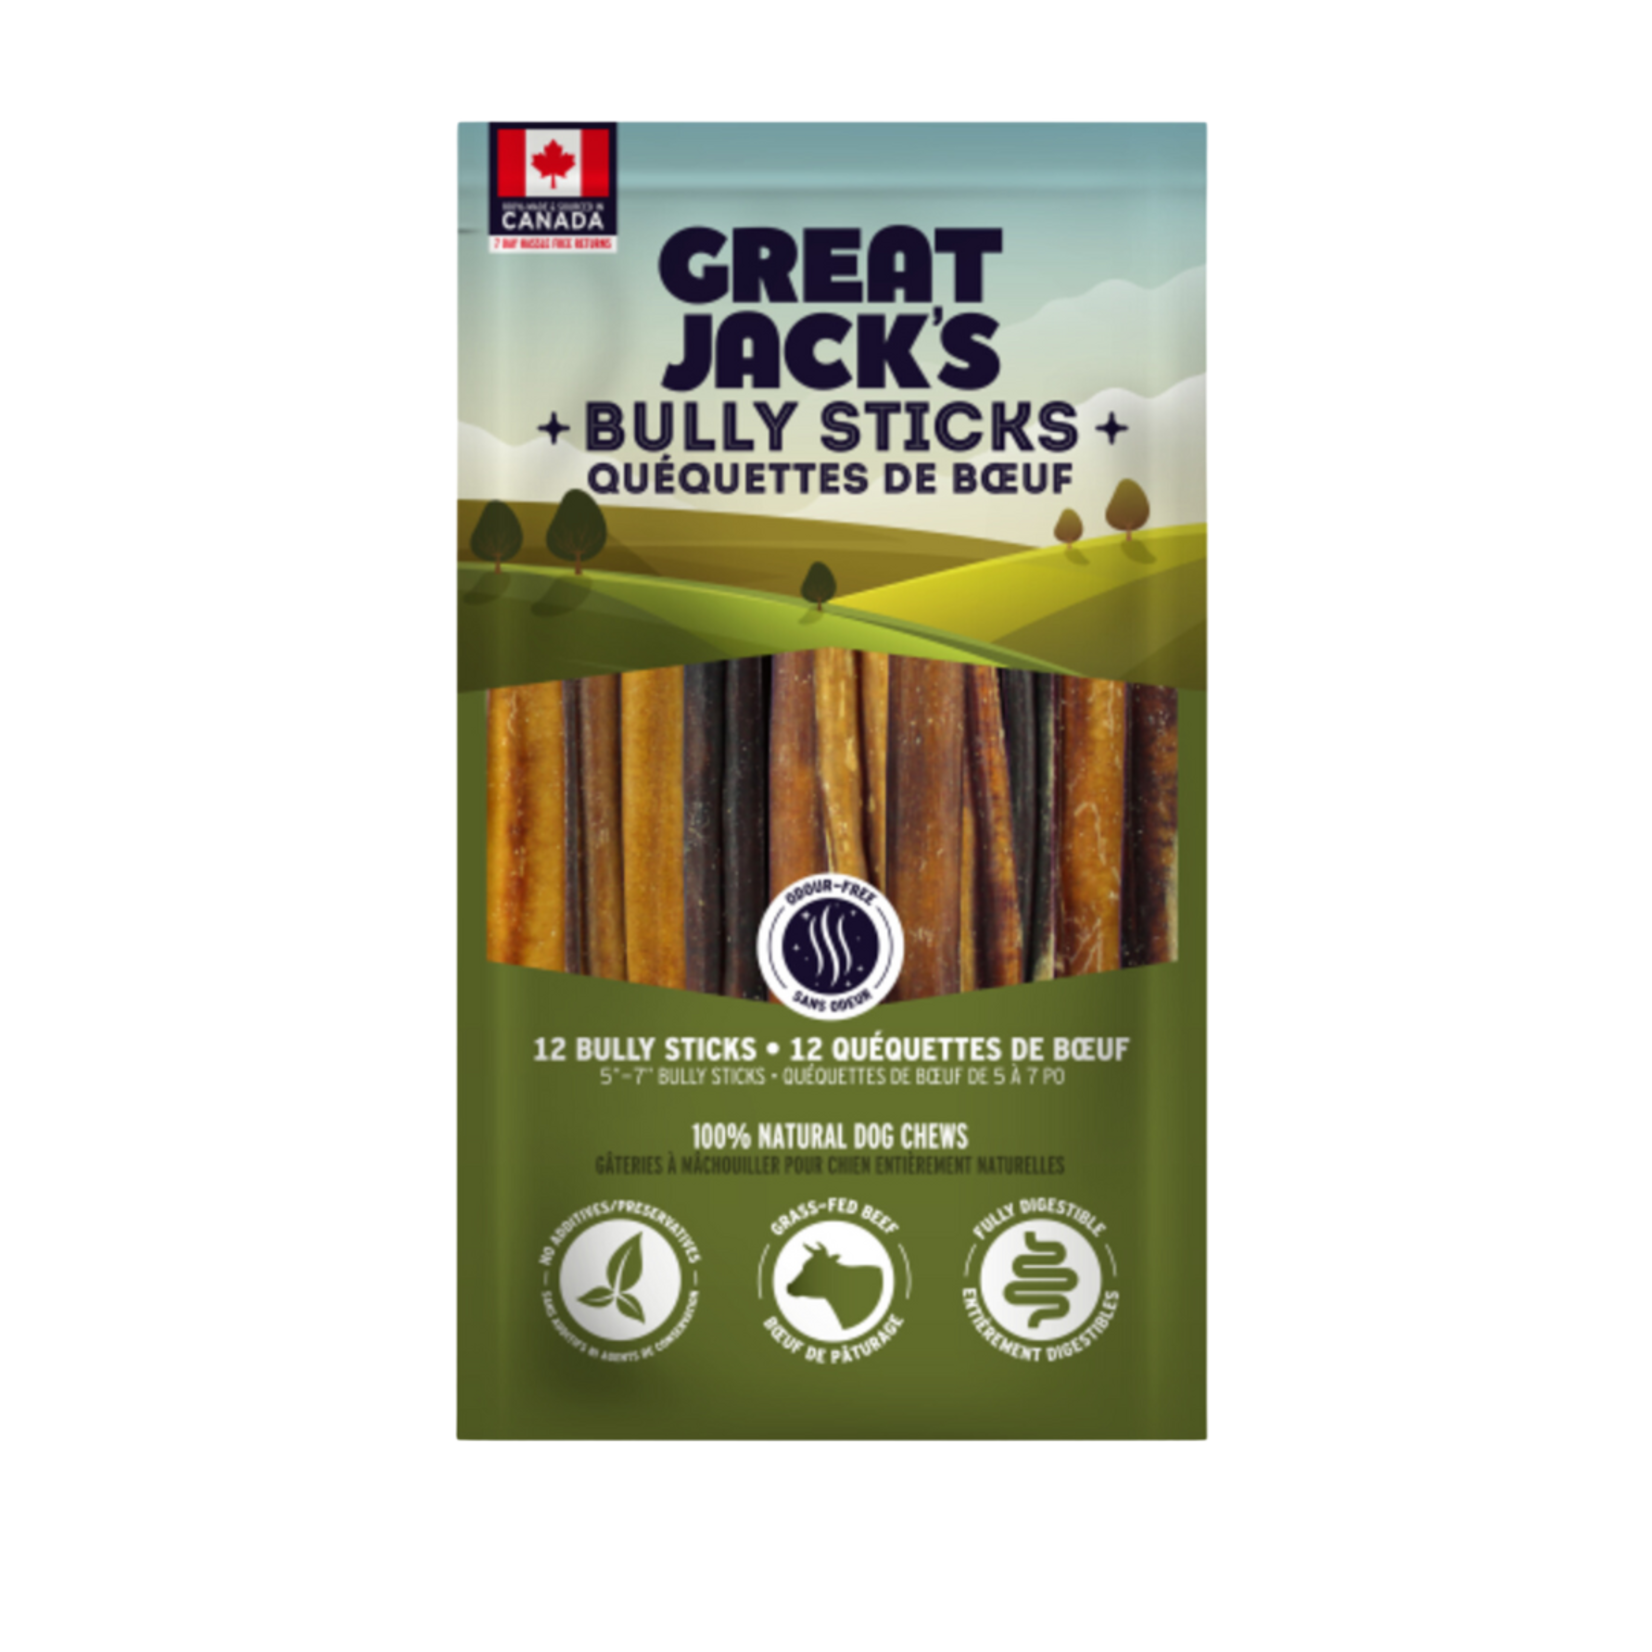 Great Jack's Great Jack's Bully Sticks